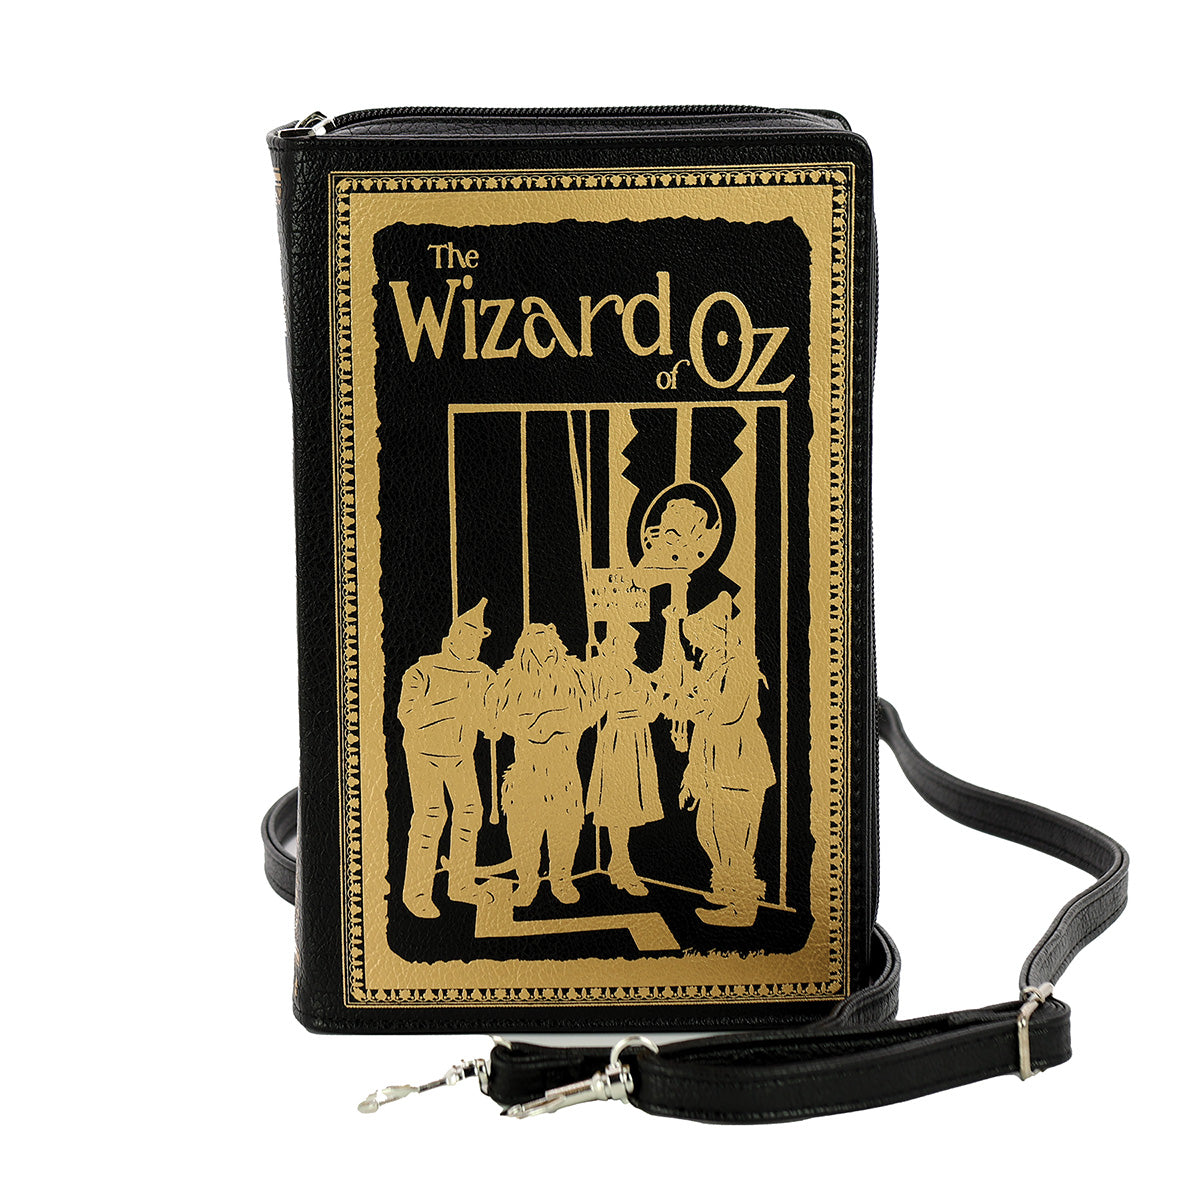 Wizard of Oz Book Clutch Bag in Vinyl Material